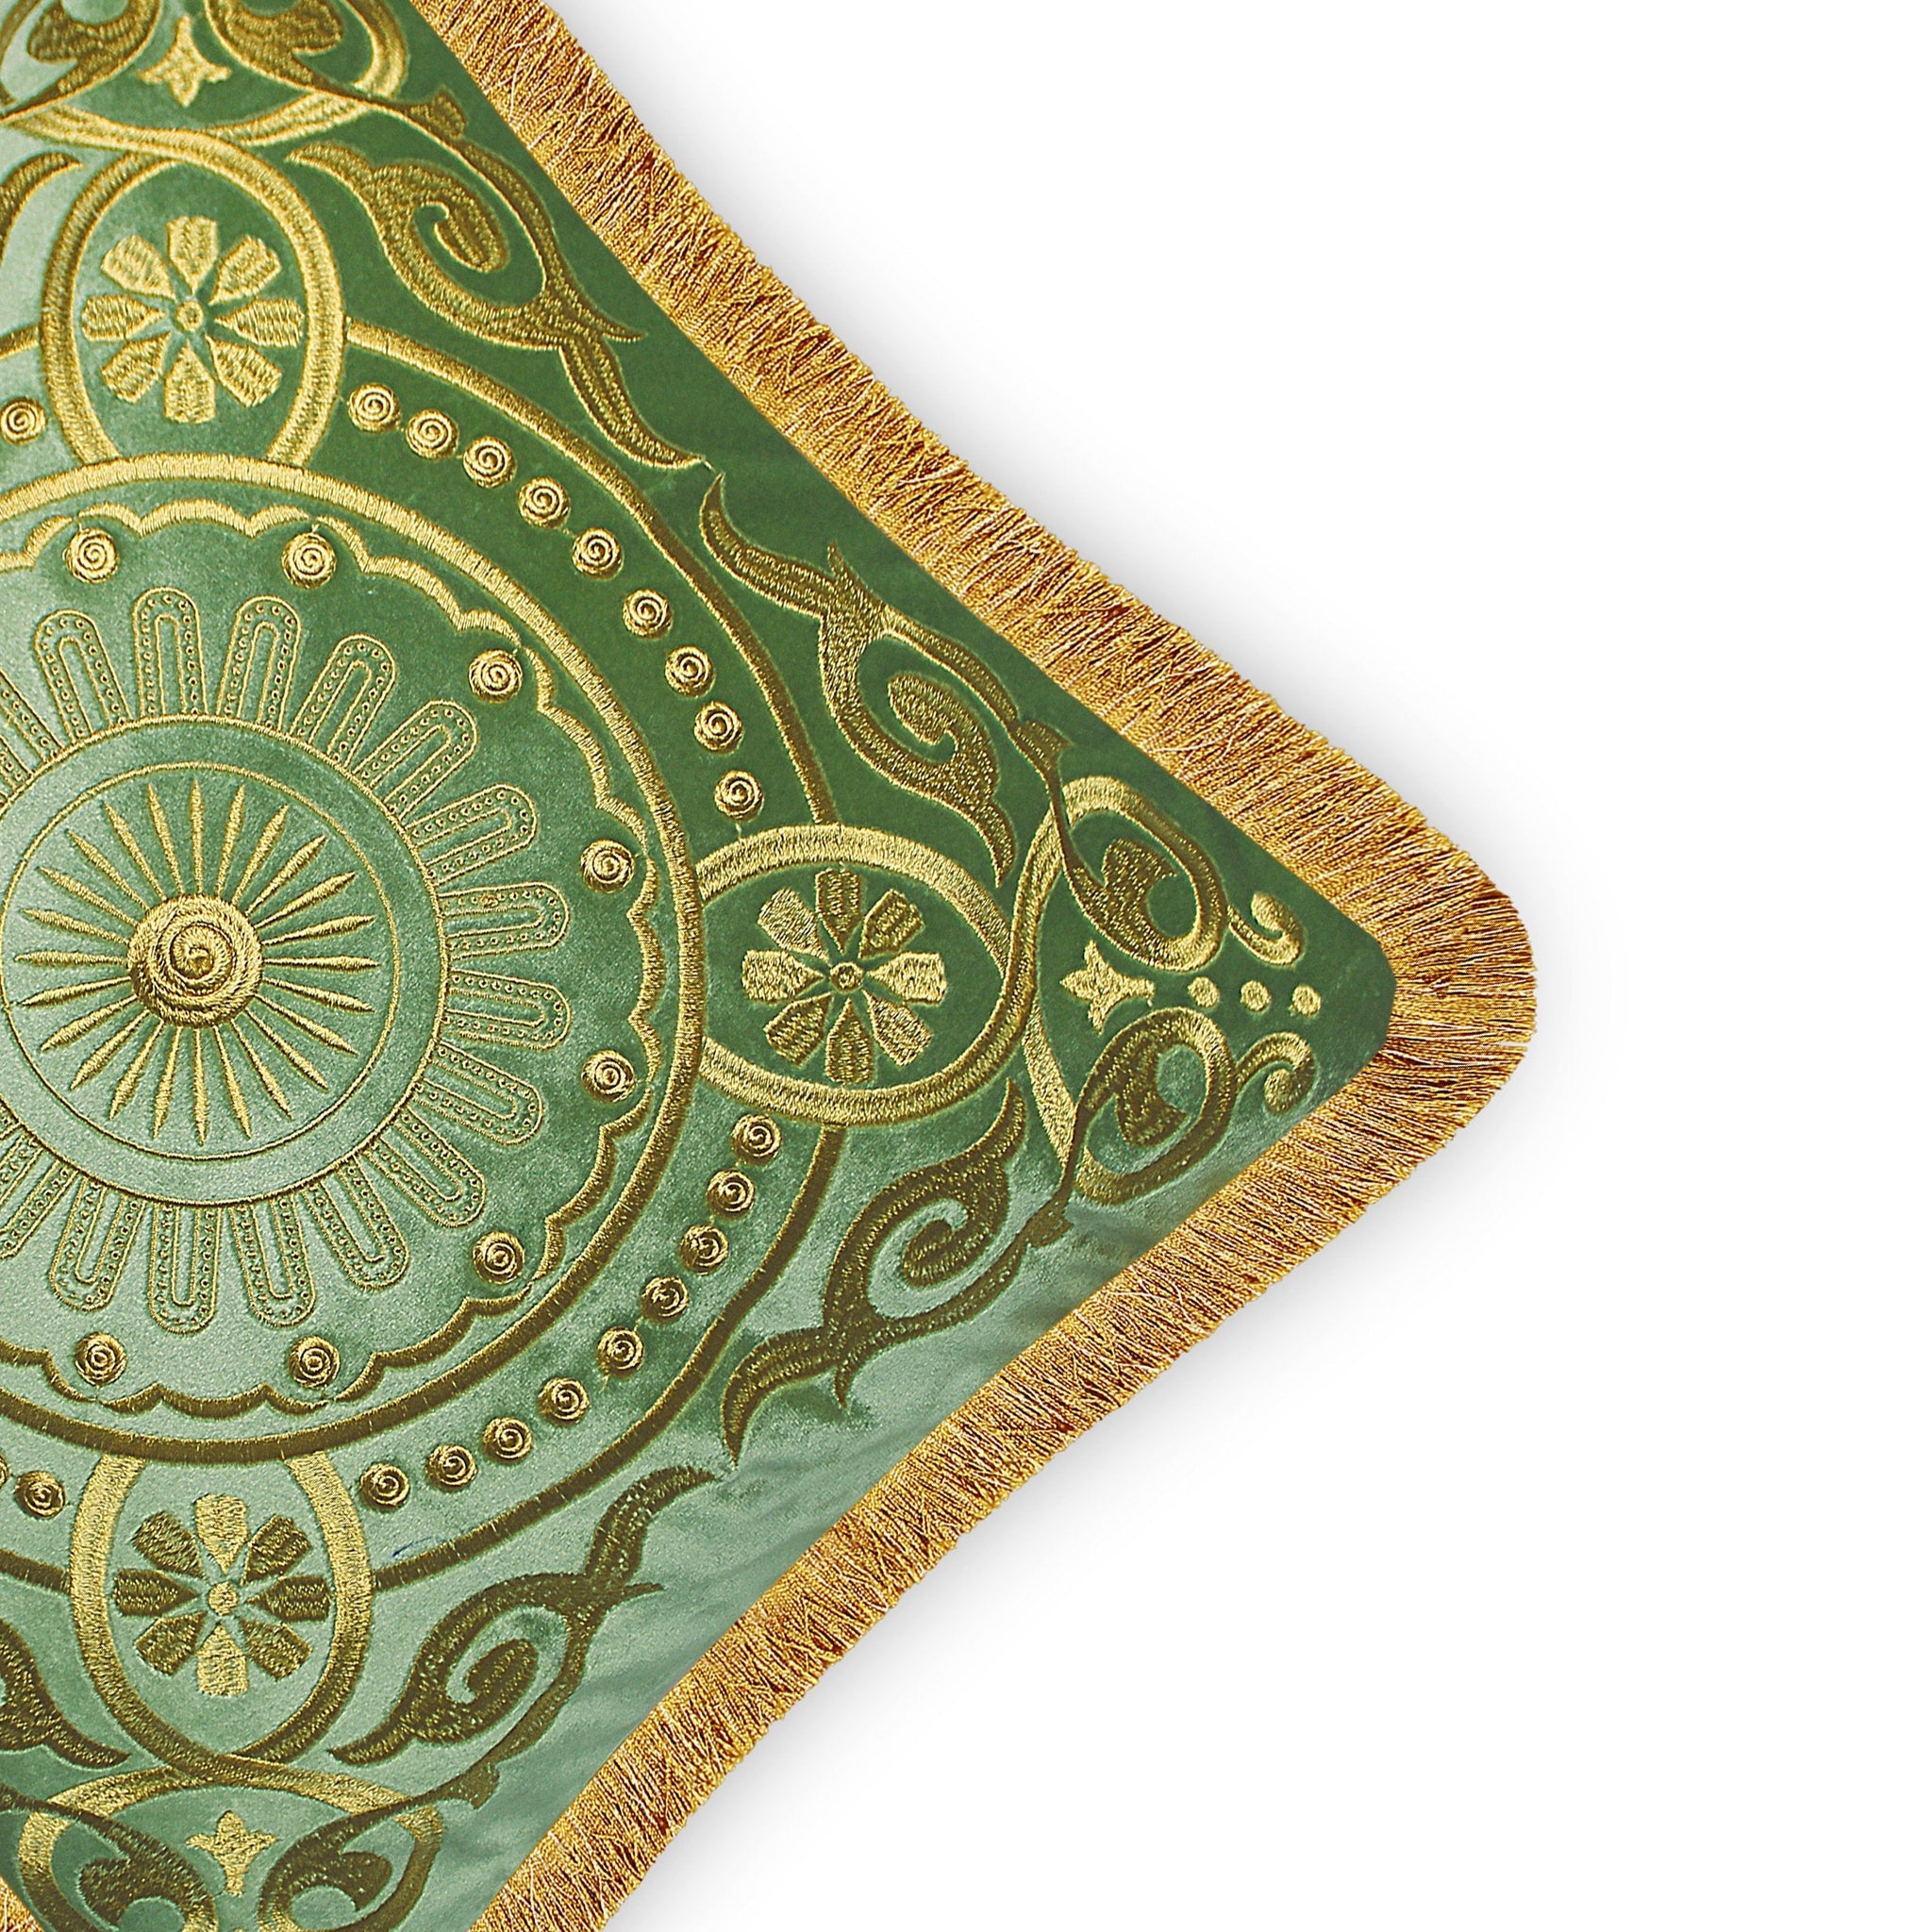 Gold Fringe Baroque Décor Motif Embroidered Cushion Cover Velvet Pillow Case Home Decorative European Sofa Throw Pillows Green Beige